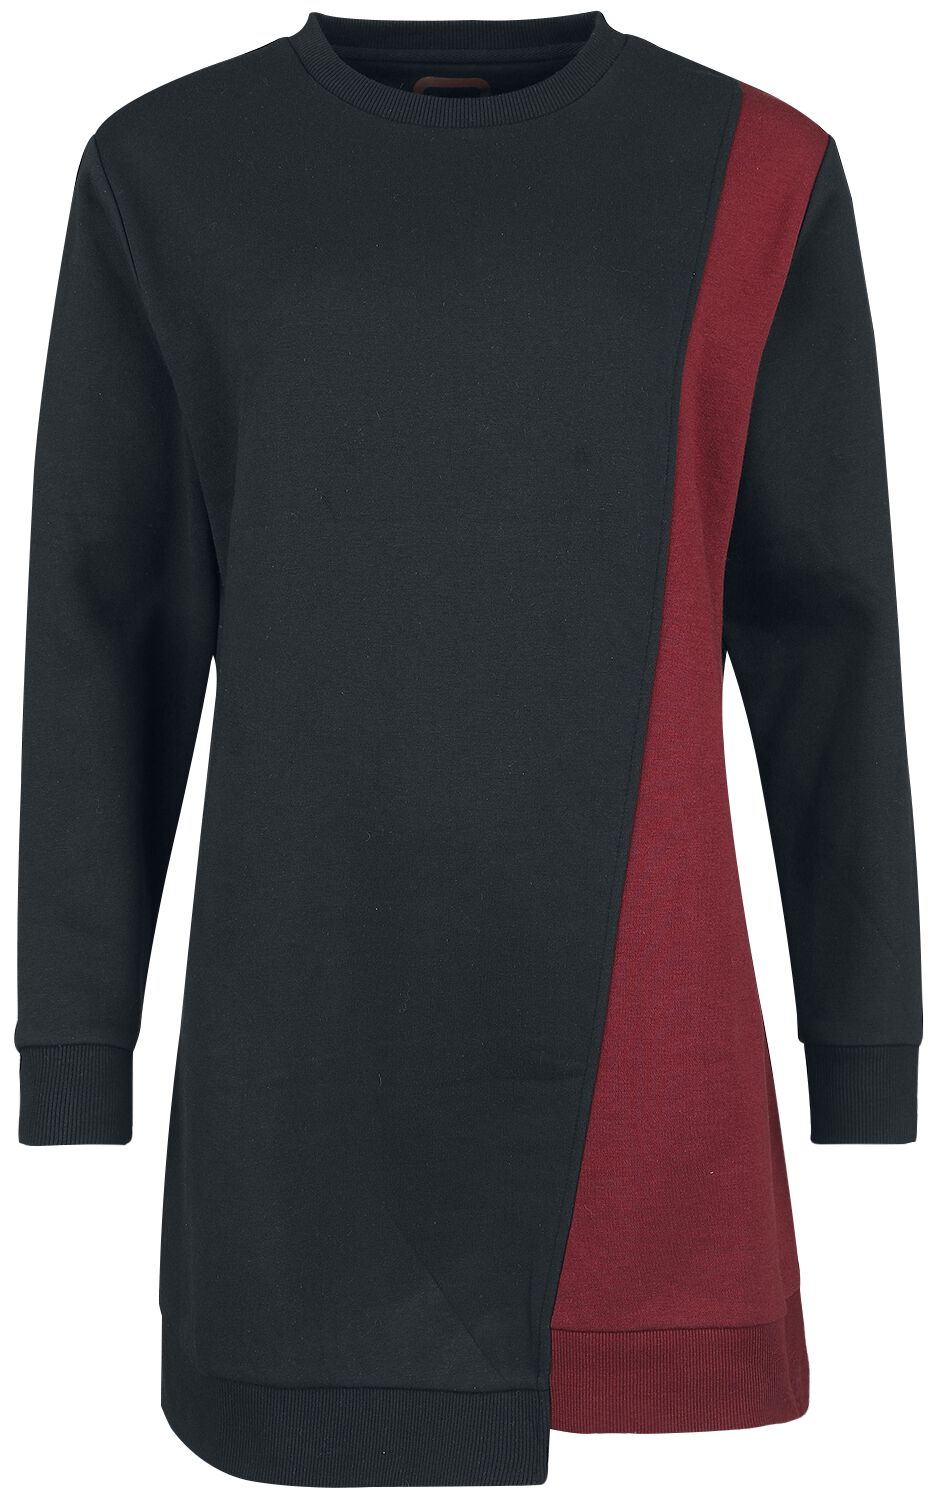 RED by EMP Sweatshirt Dress with asymmetrical Cut Kurzes Kleid schwarz dunkelrot in L